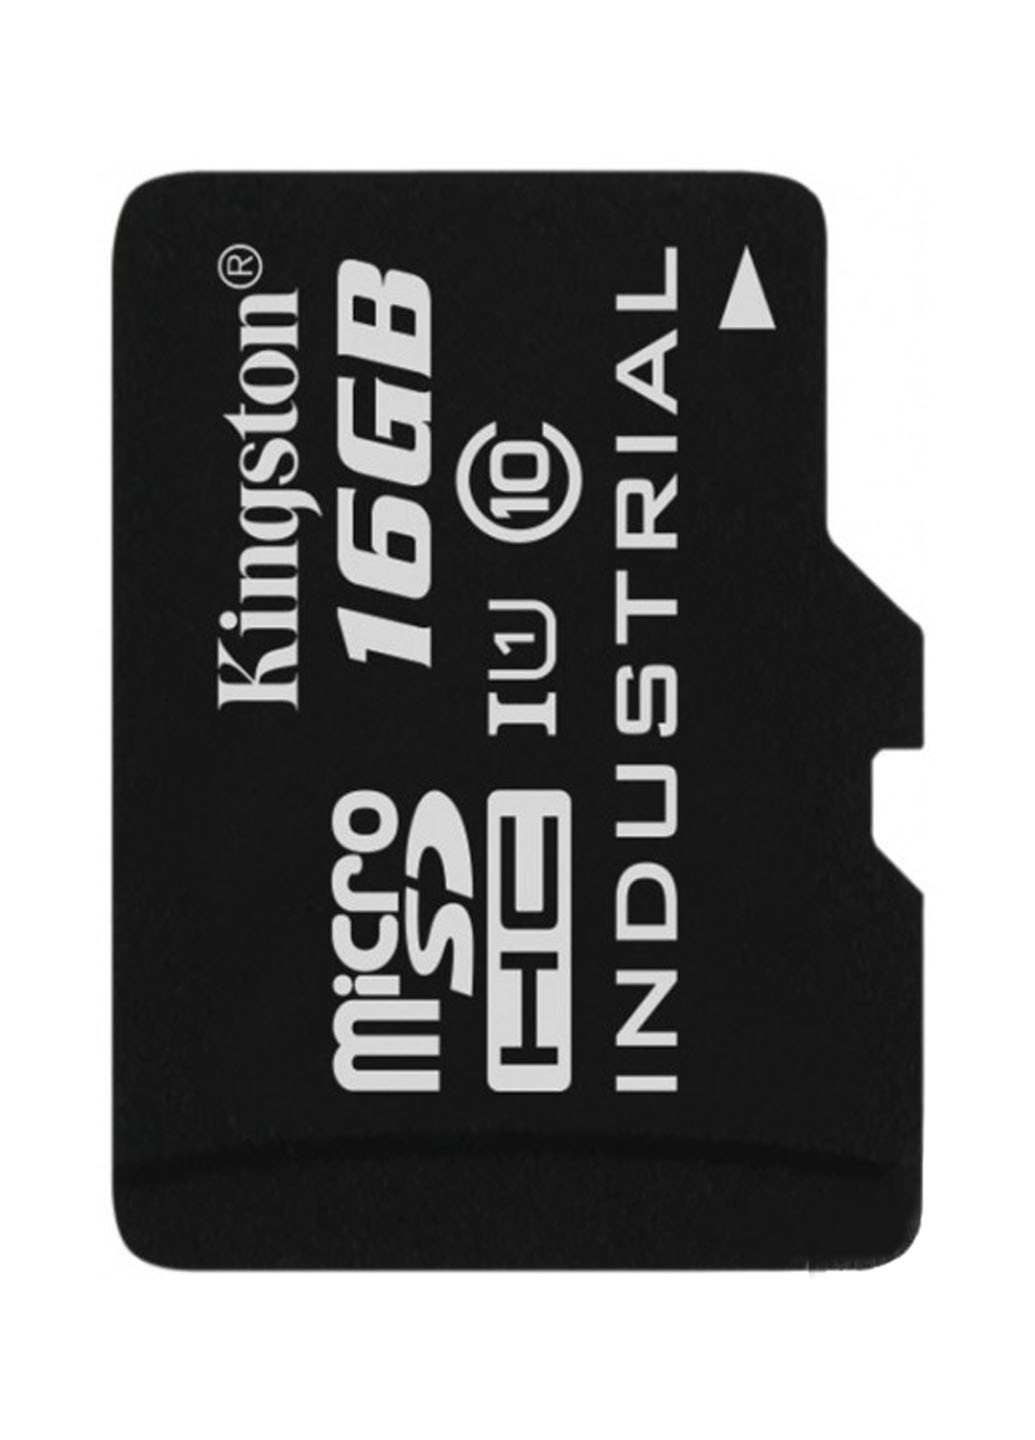 Карта памяти microSDHC 16GB C10 UHS-I Industrial Temperature Card (SDCIT/16GBSP) Kingston карта памяти kingston microsdhc 16gb c10 uhs-i industrial temperature card (sdcit/16gbsp) (136711360)